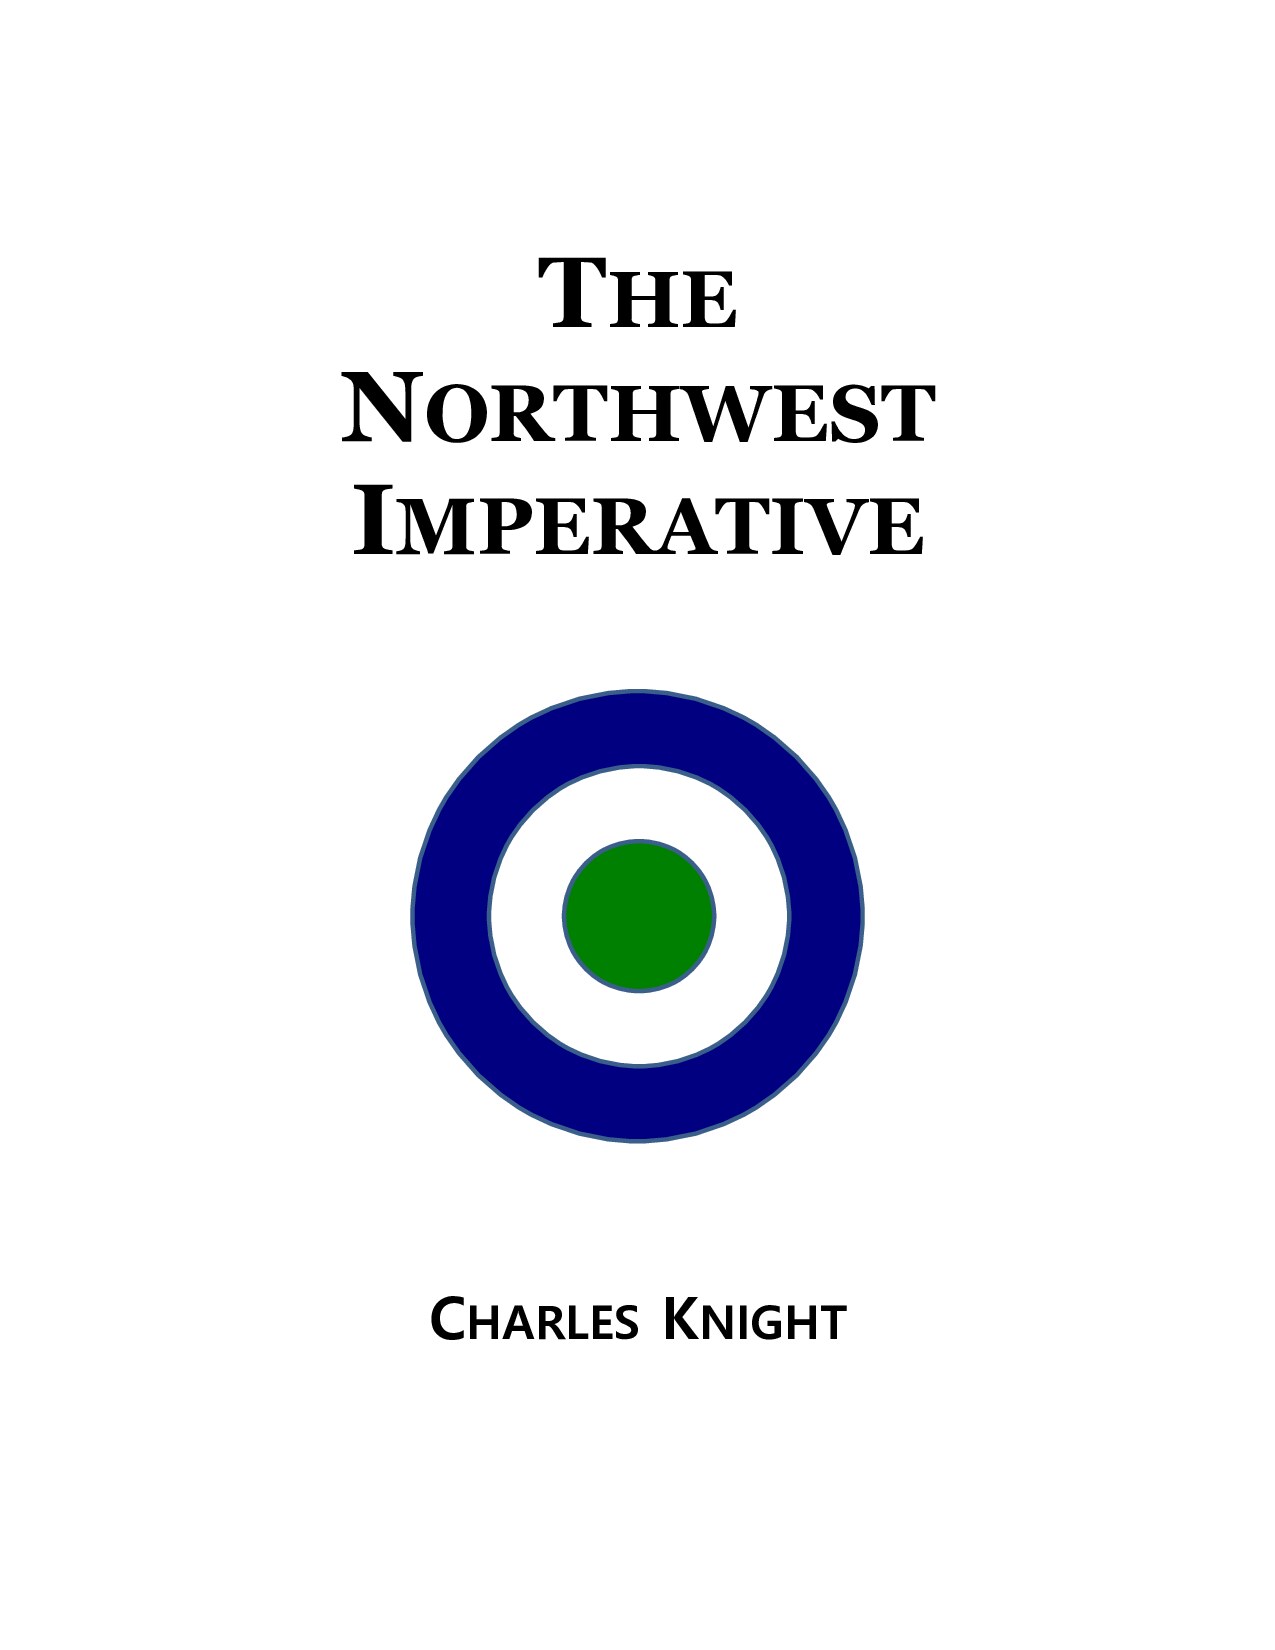 The Northwest Imperative